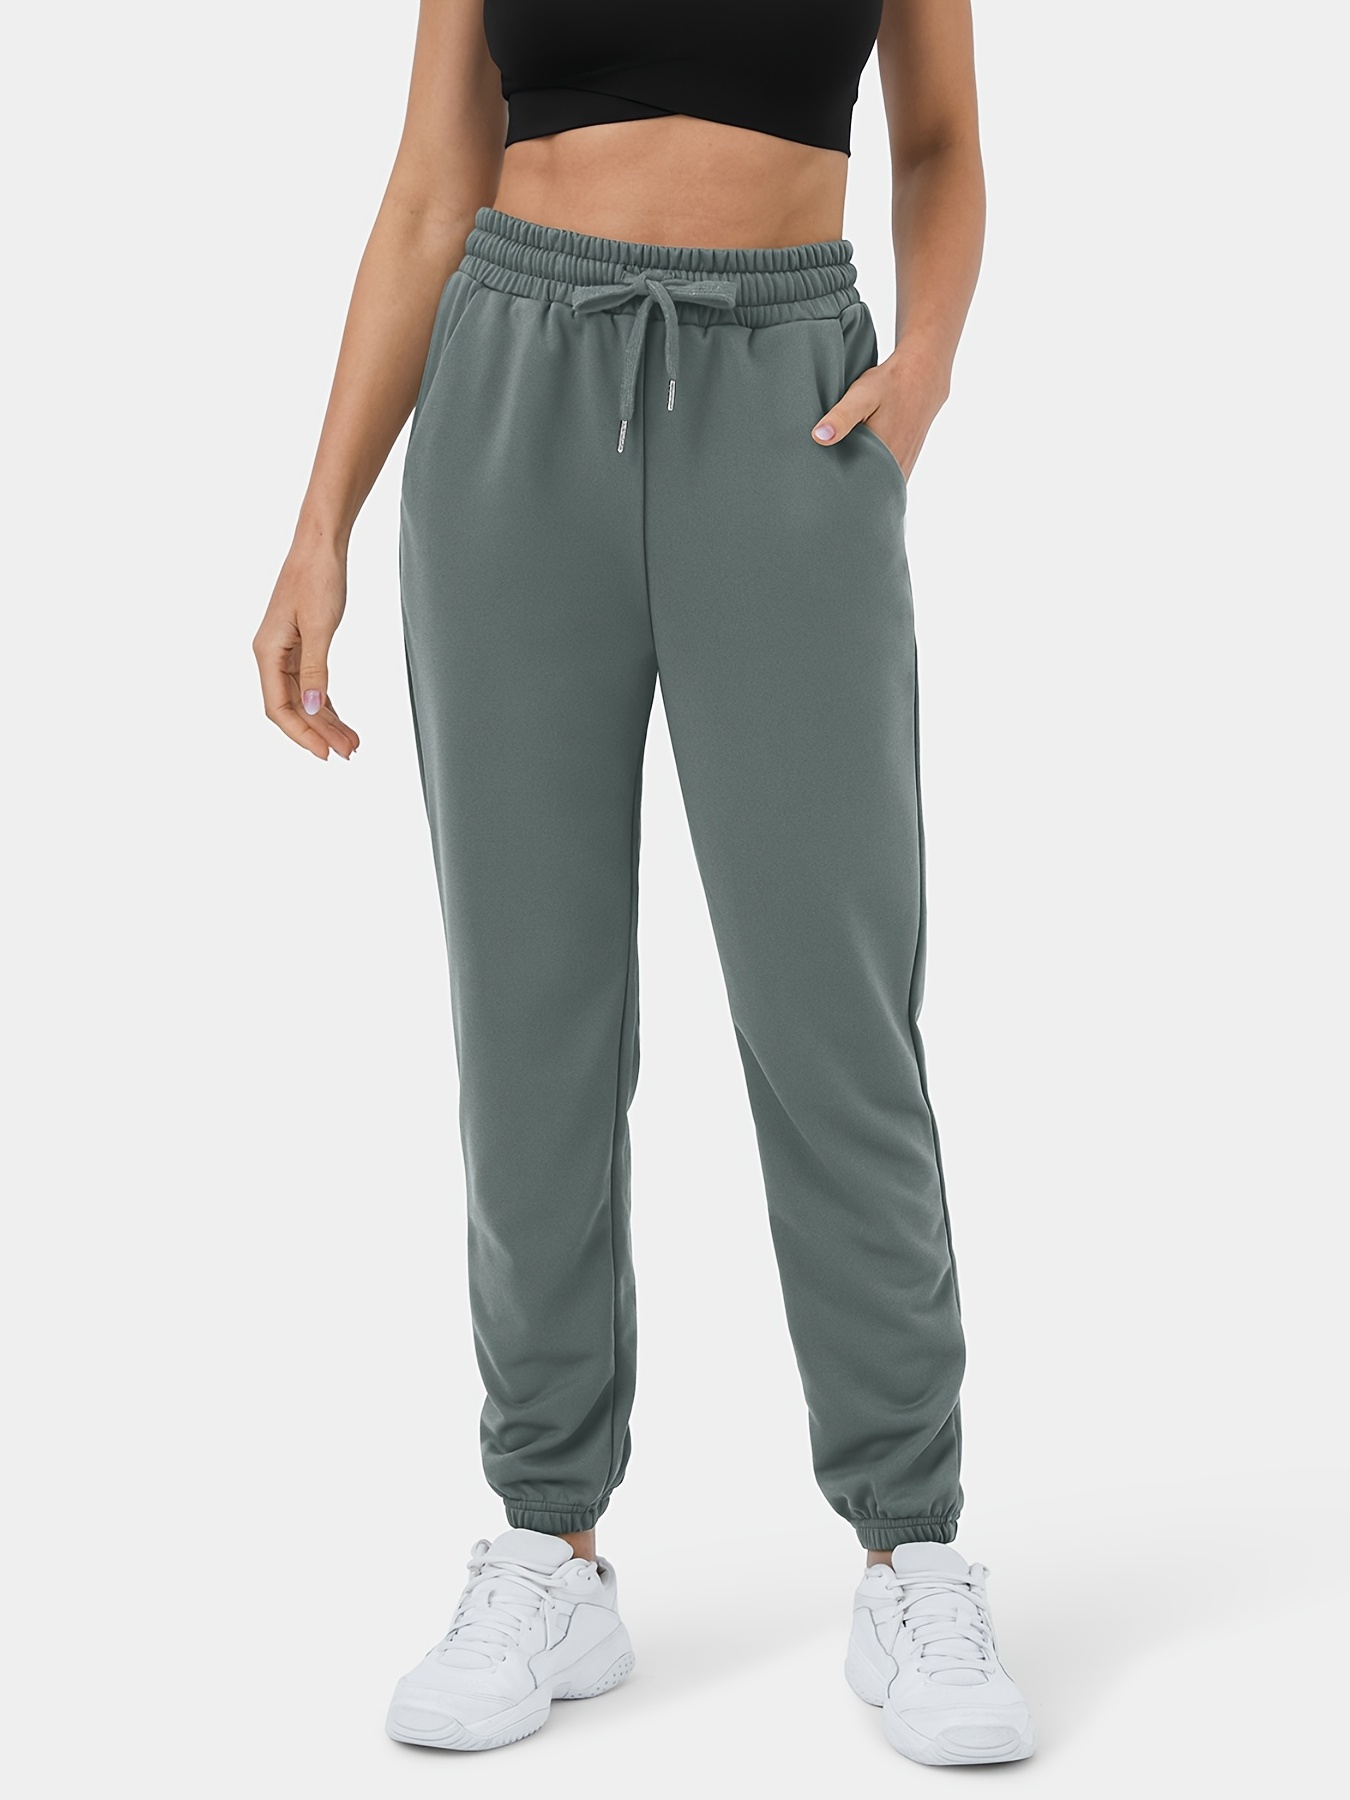 women Slant Pocket Drawstring Sweatpants women (Color : Grey, Size